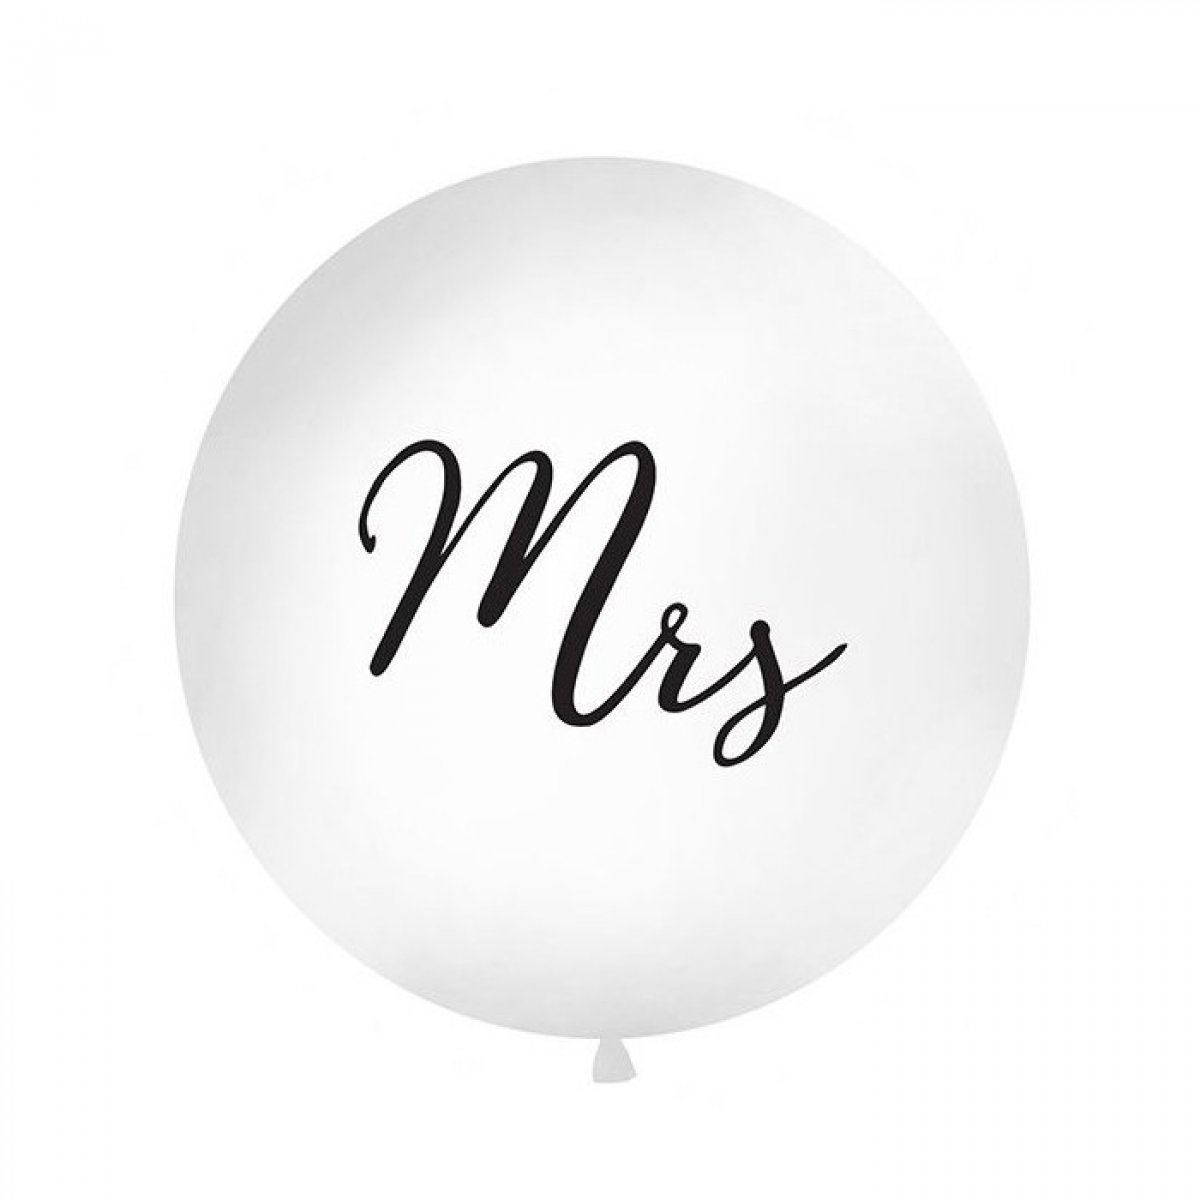 Ballon géant blanc "Mrs" - 1 m